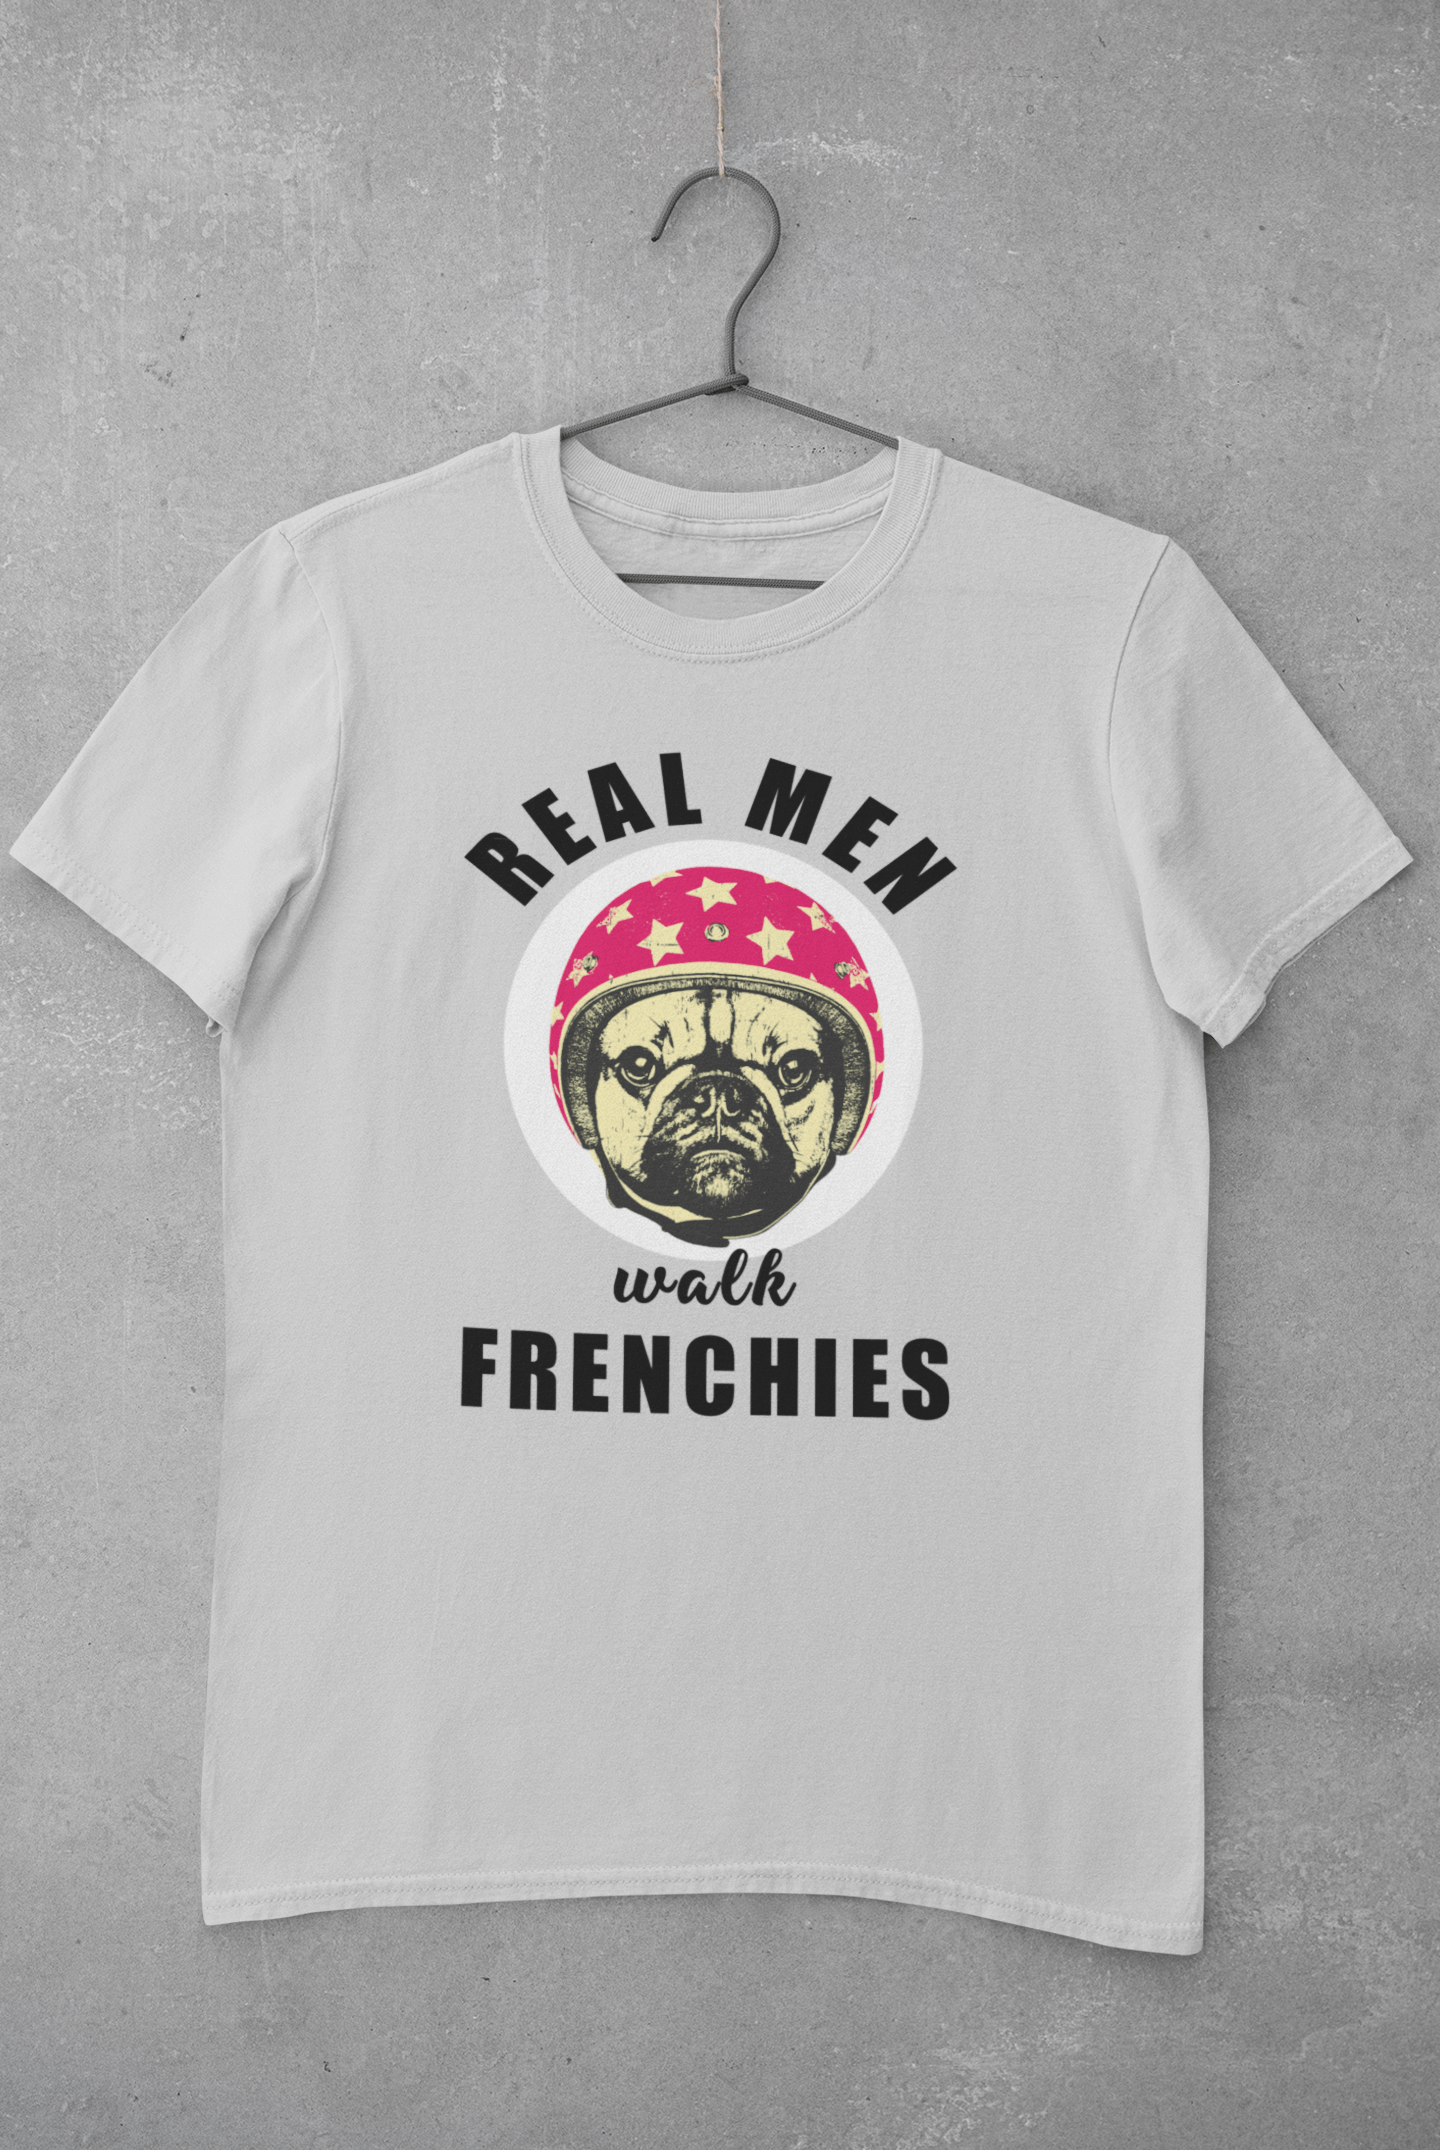 Real Men Walk Frenchies T-shirt